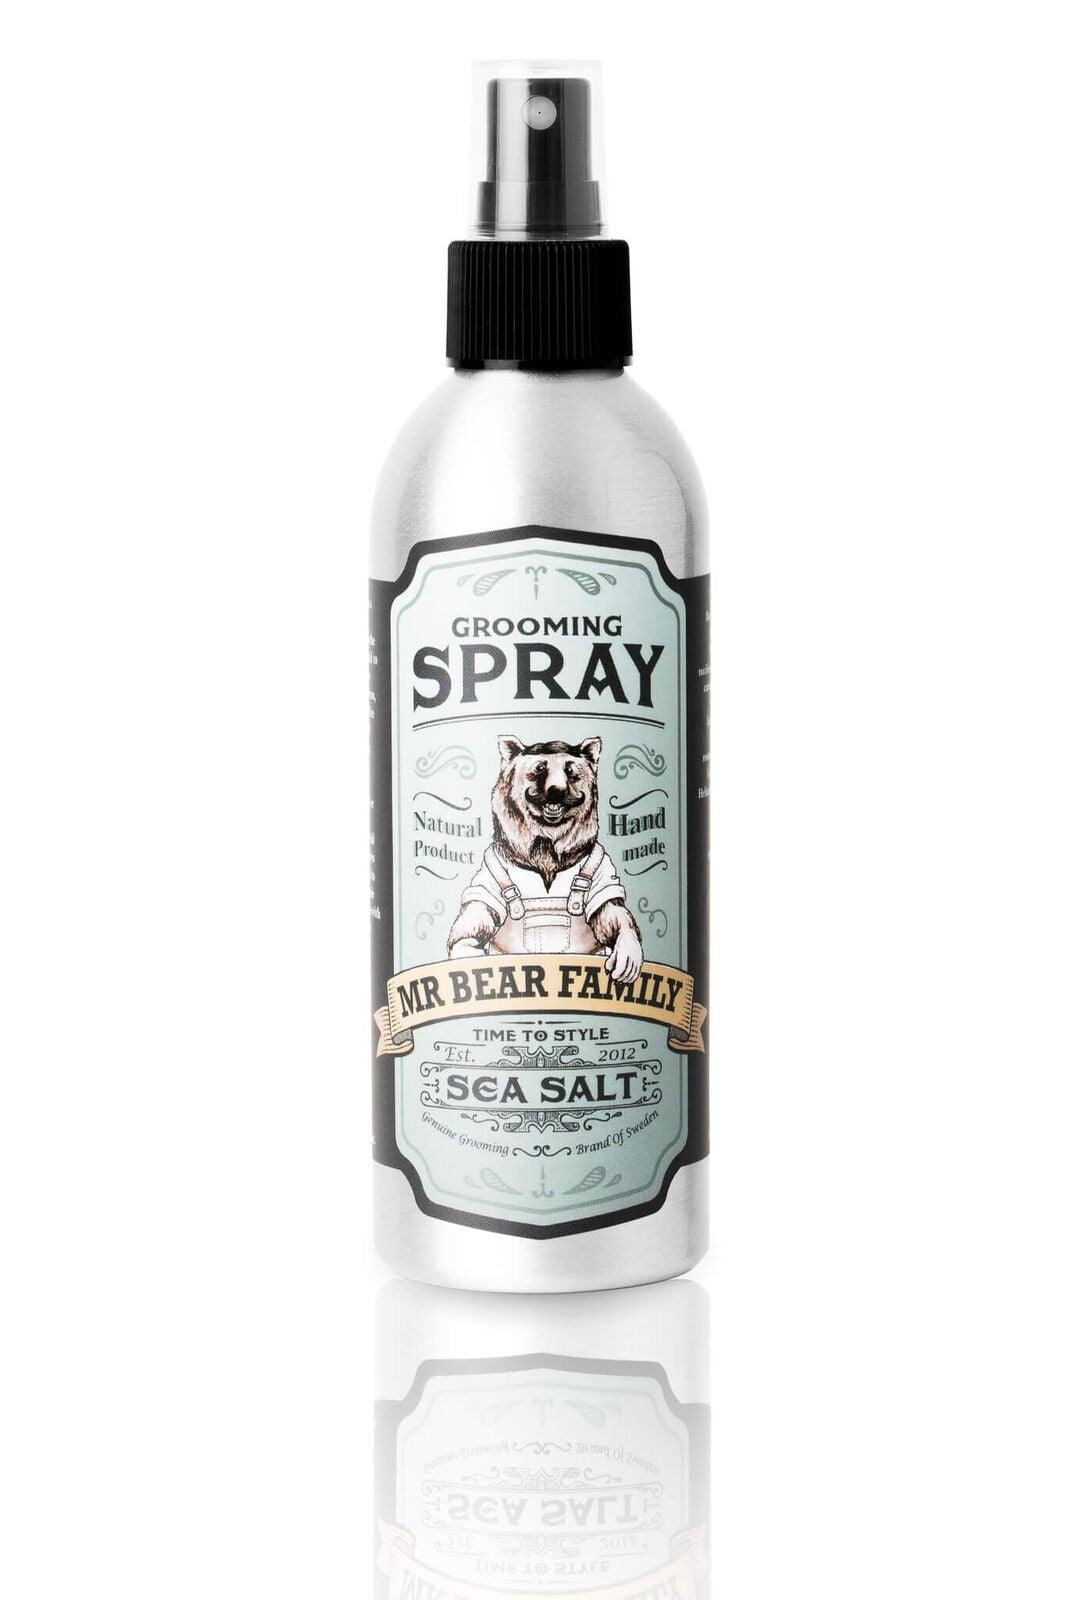 Mr. Bear Family - Grooming spray - Sea salt - Hármótunarefni